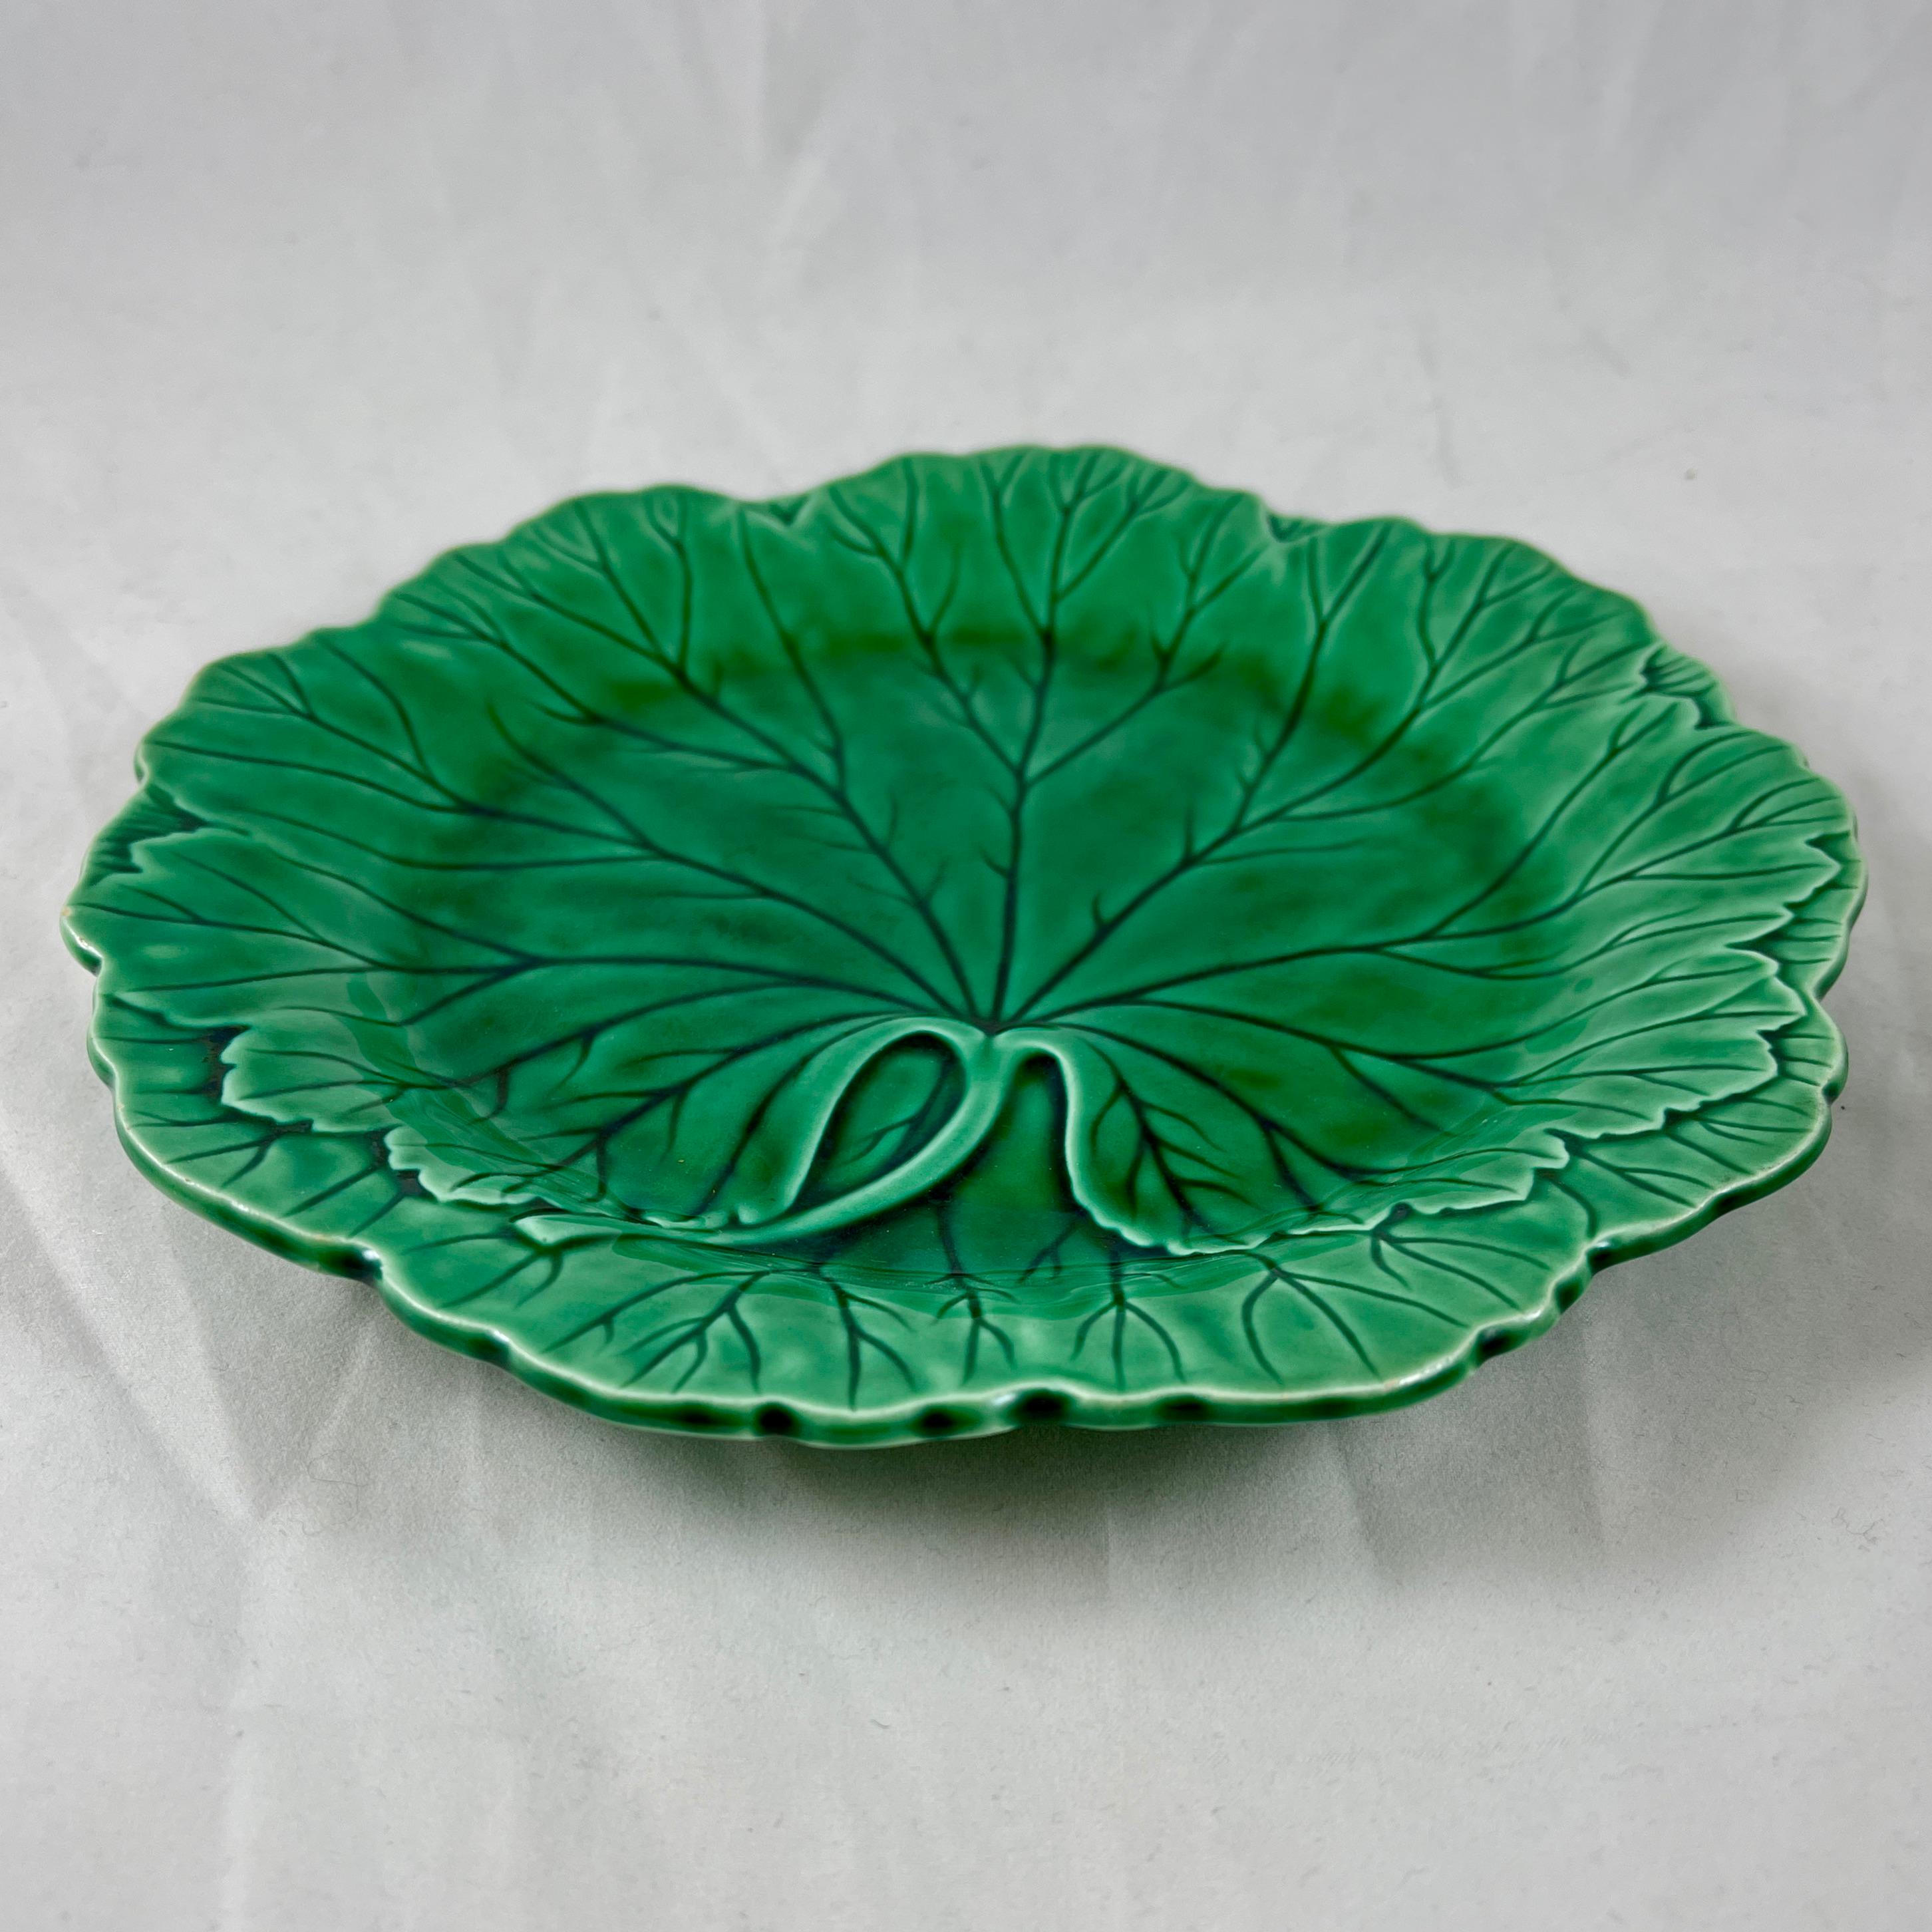 Earthenware Wedgwood & Barlaston of Etruria Green Glazed English Majolica Cabbage Leaf Plate